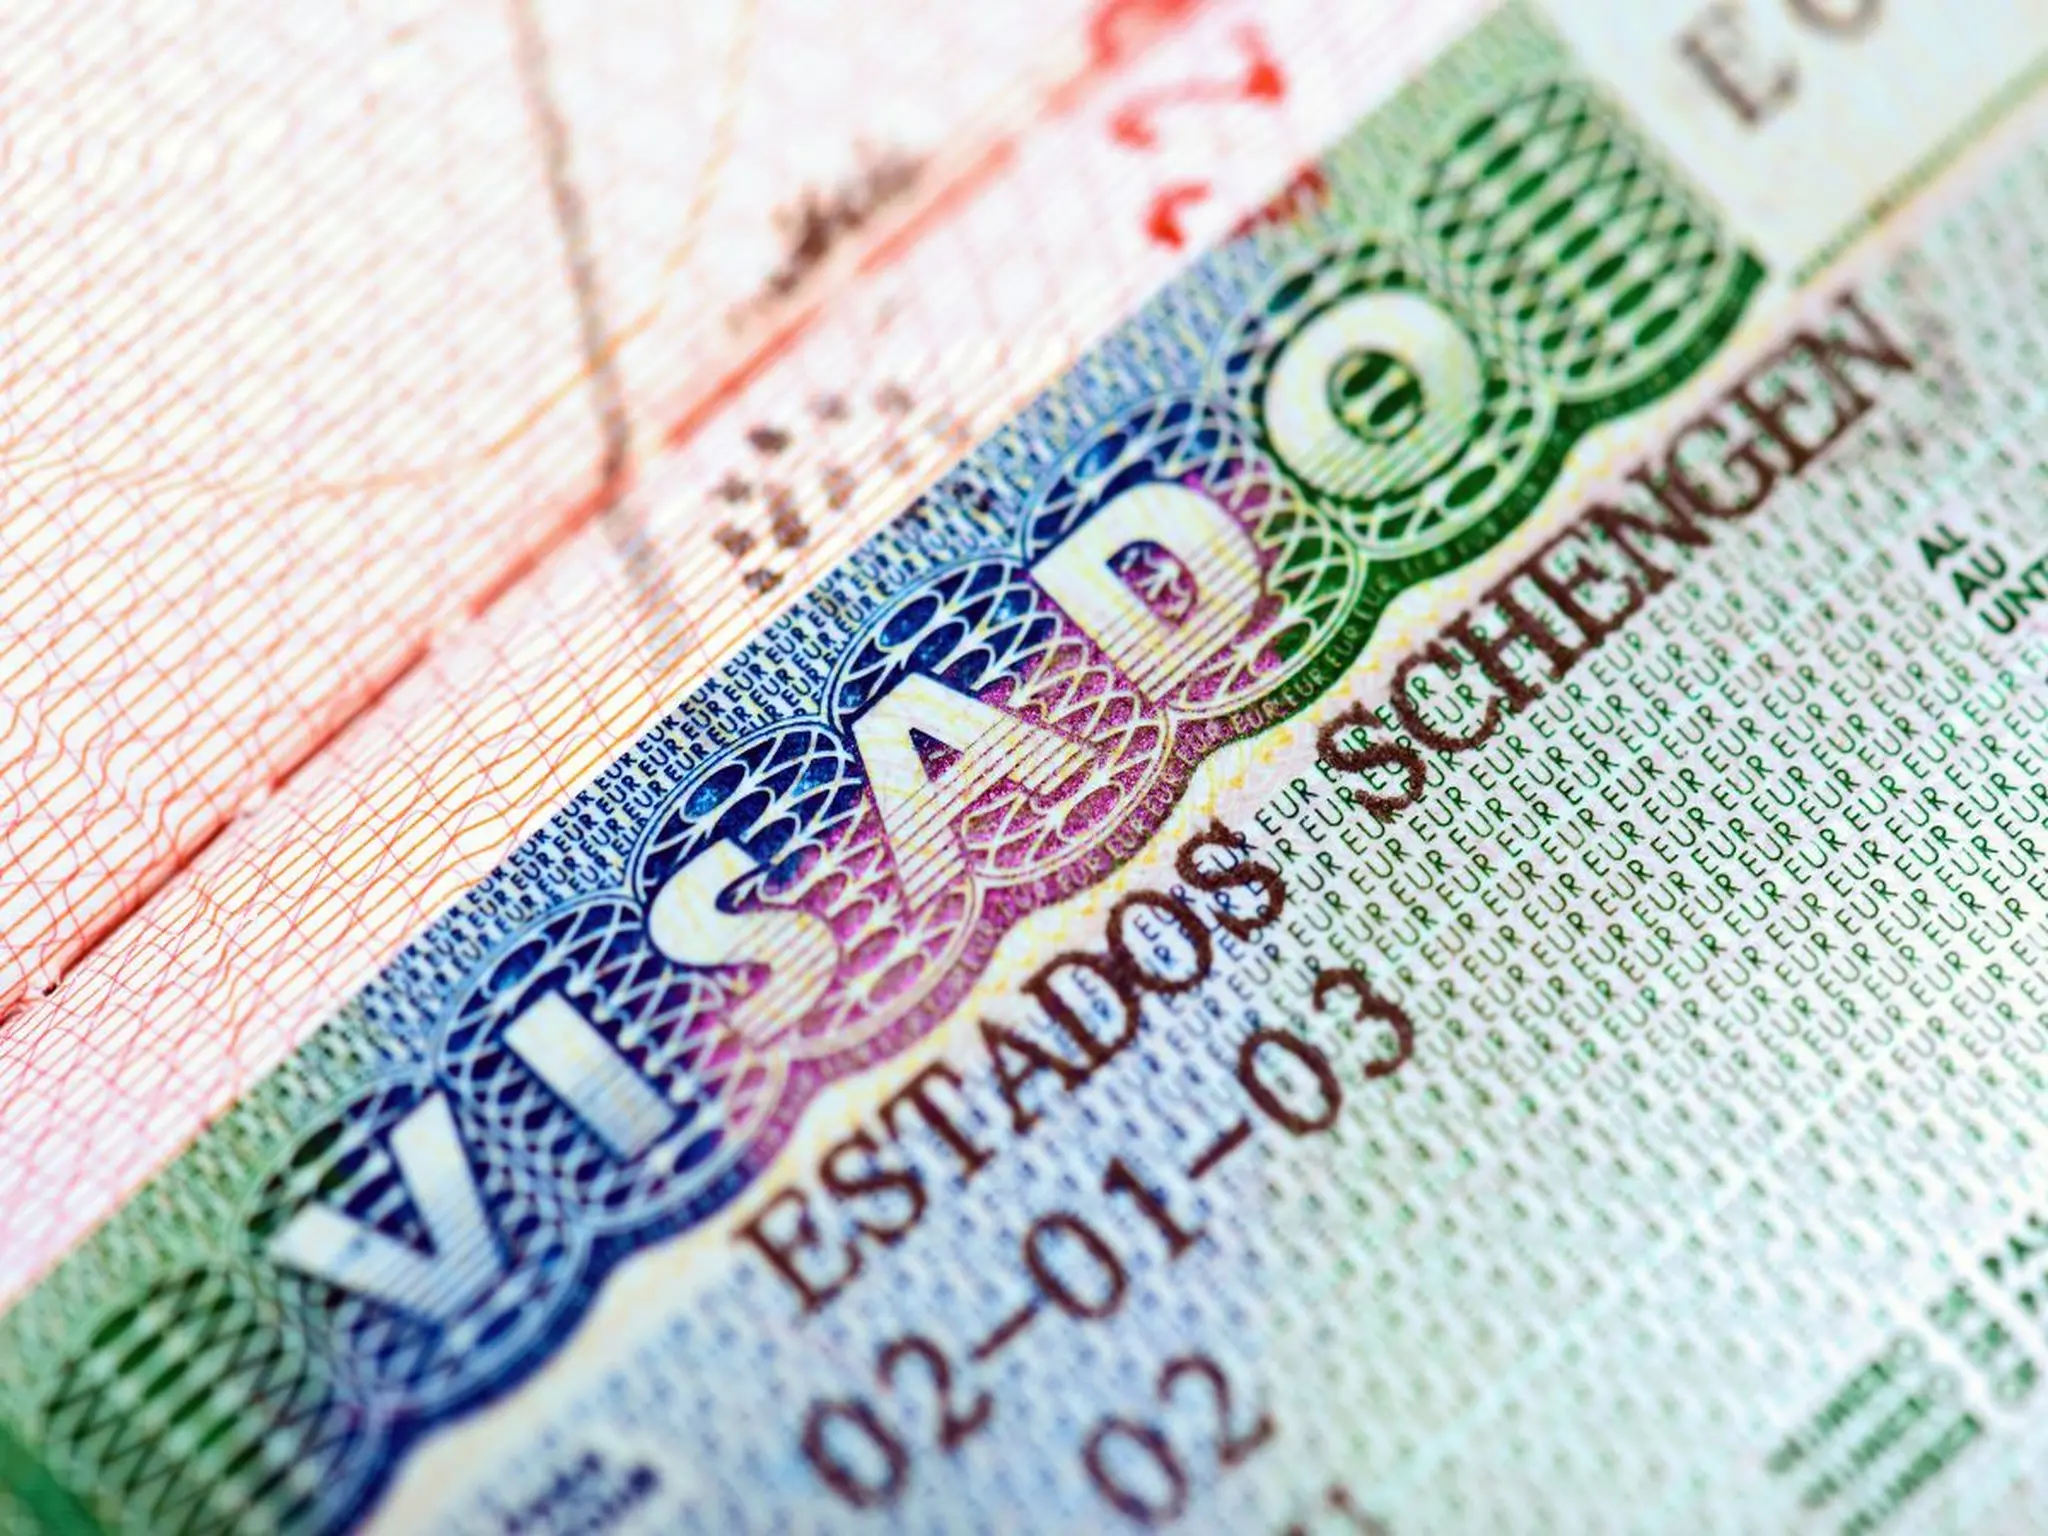 The UAE reveals how to obtain a Schengen visa